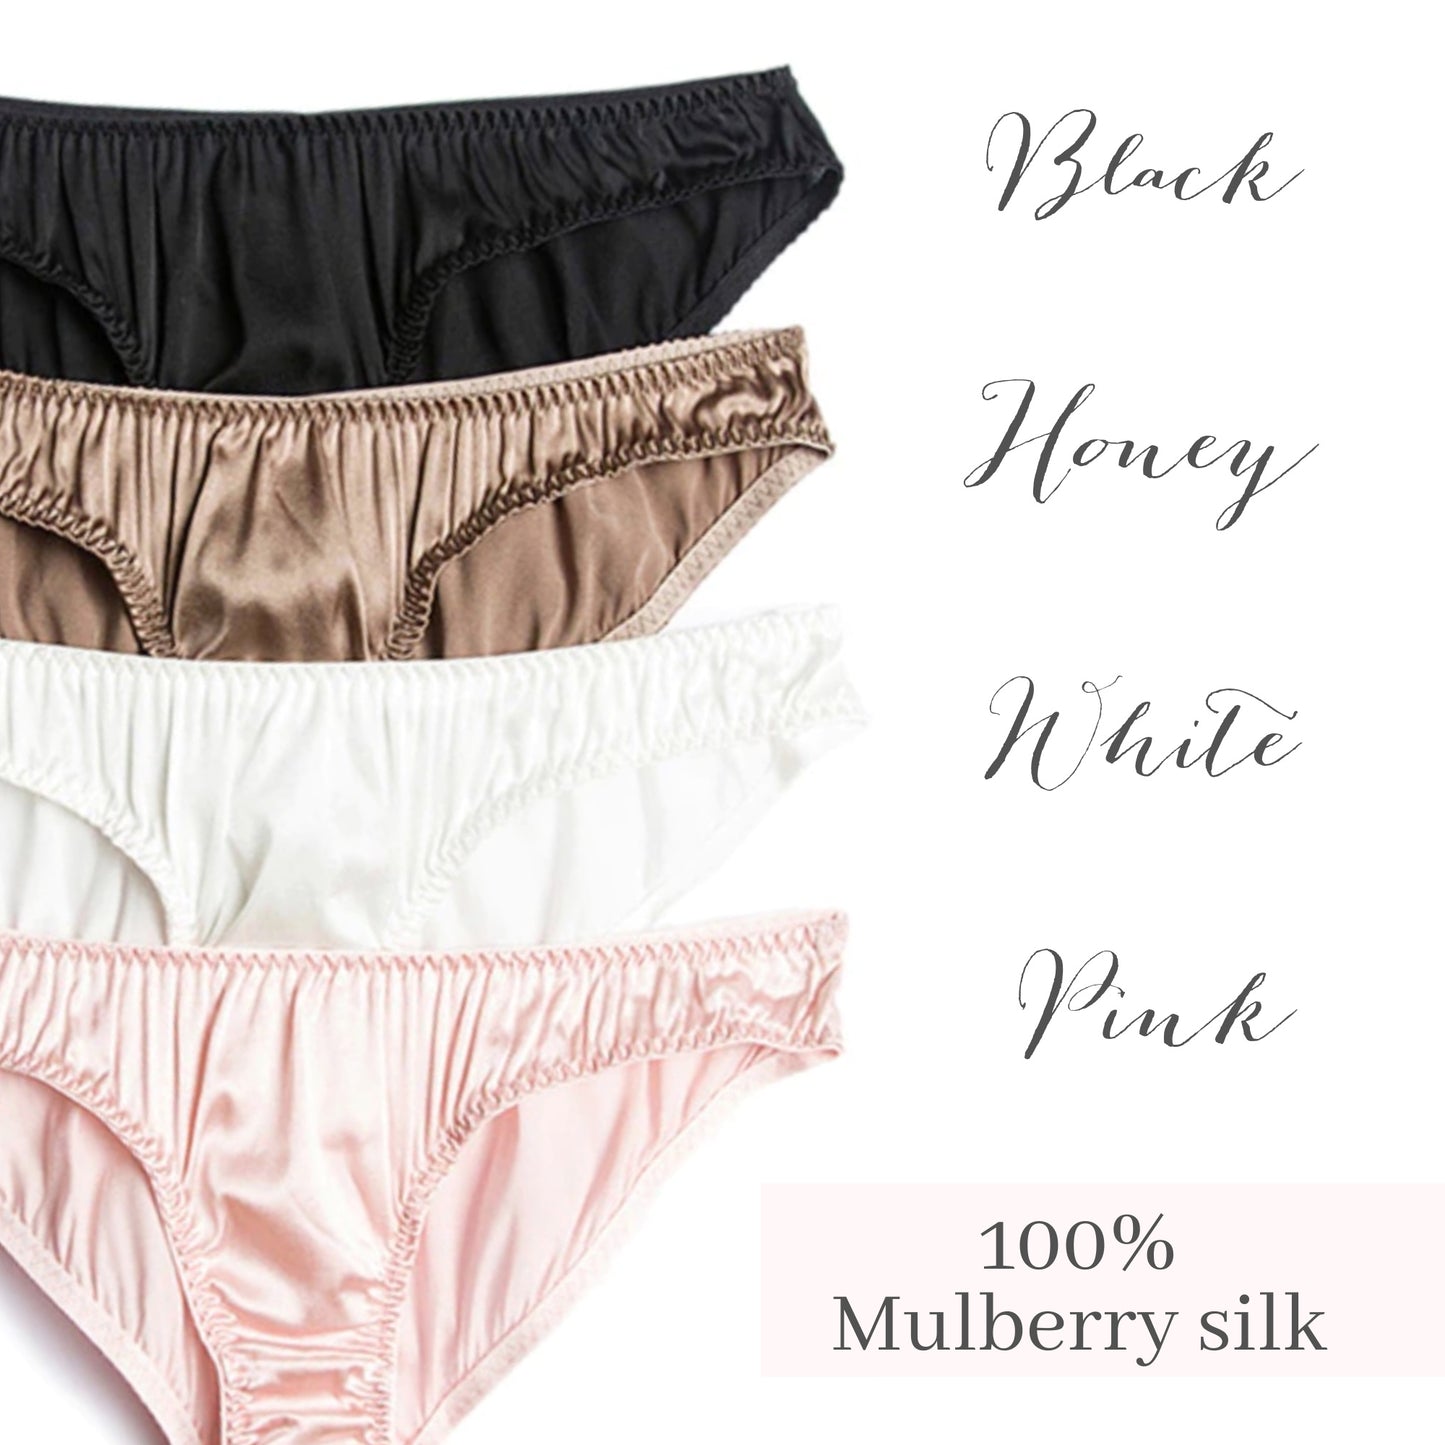 Silkcut Women's Panties: The Pinnacle of Tani's Underwear Line